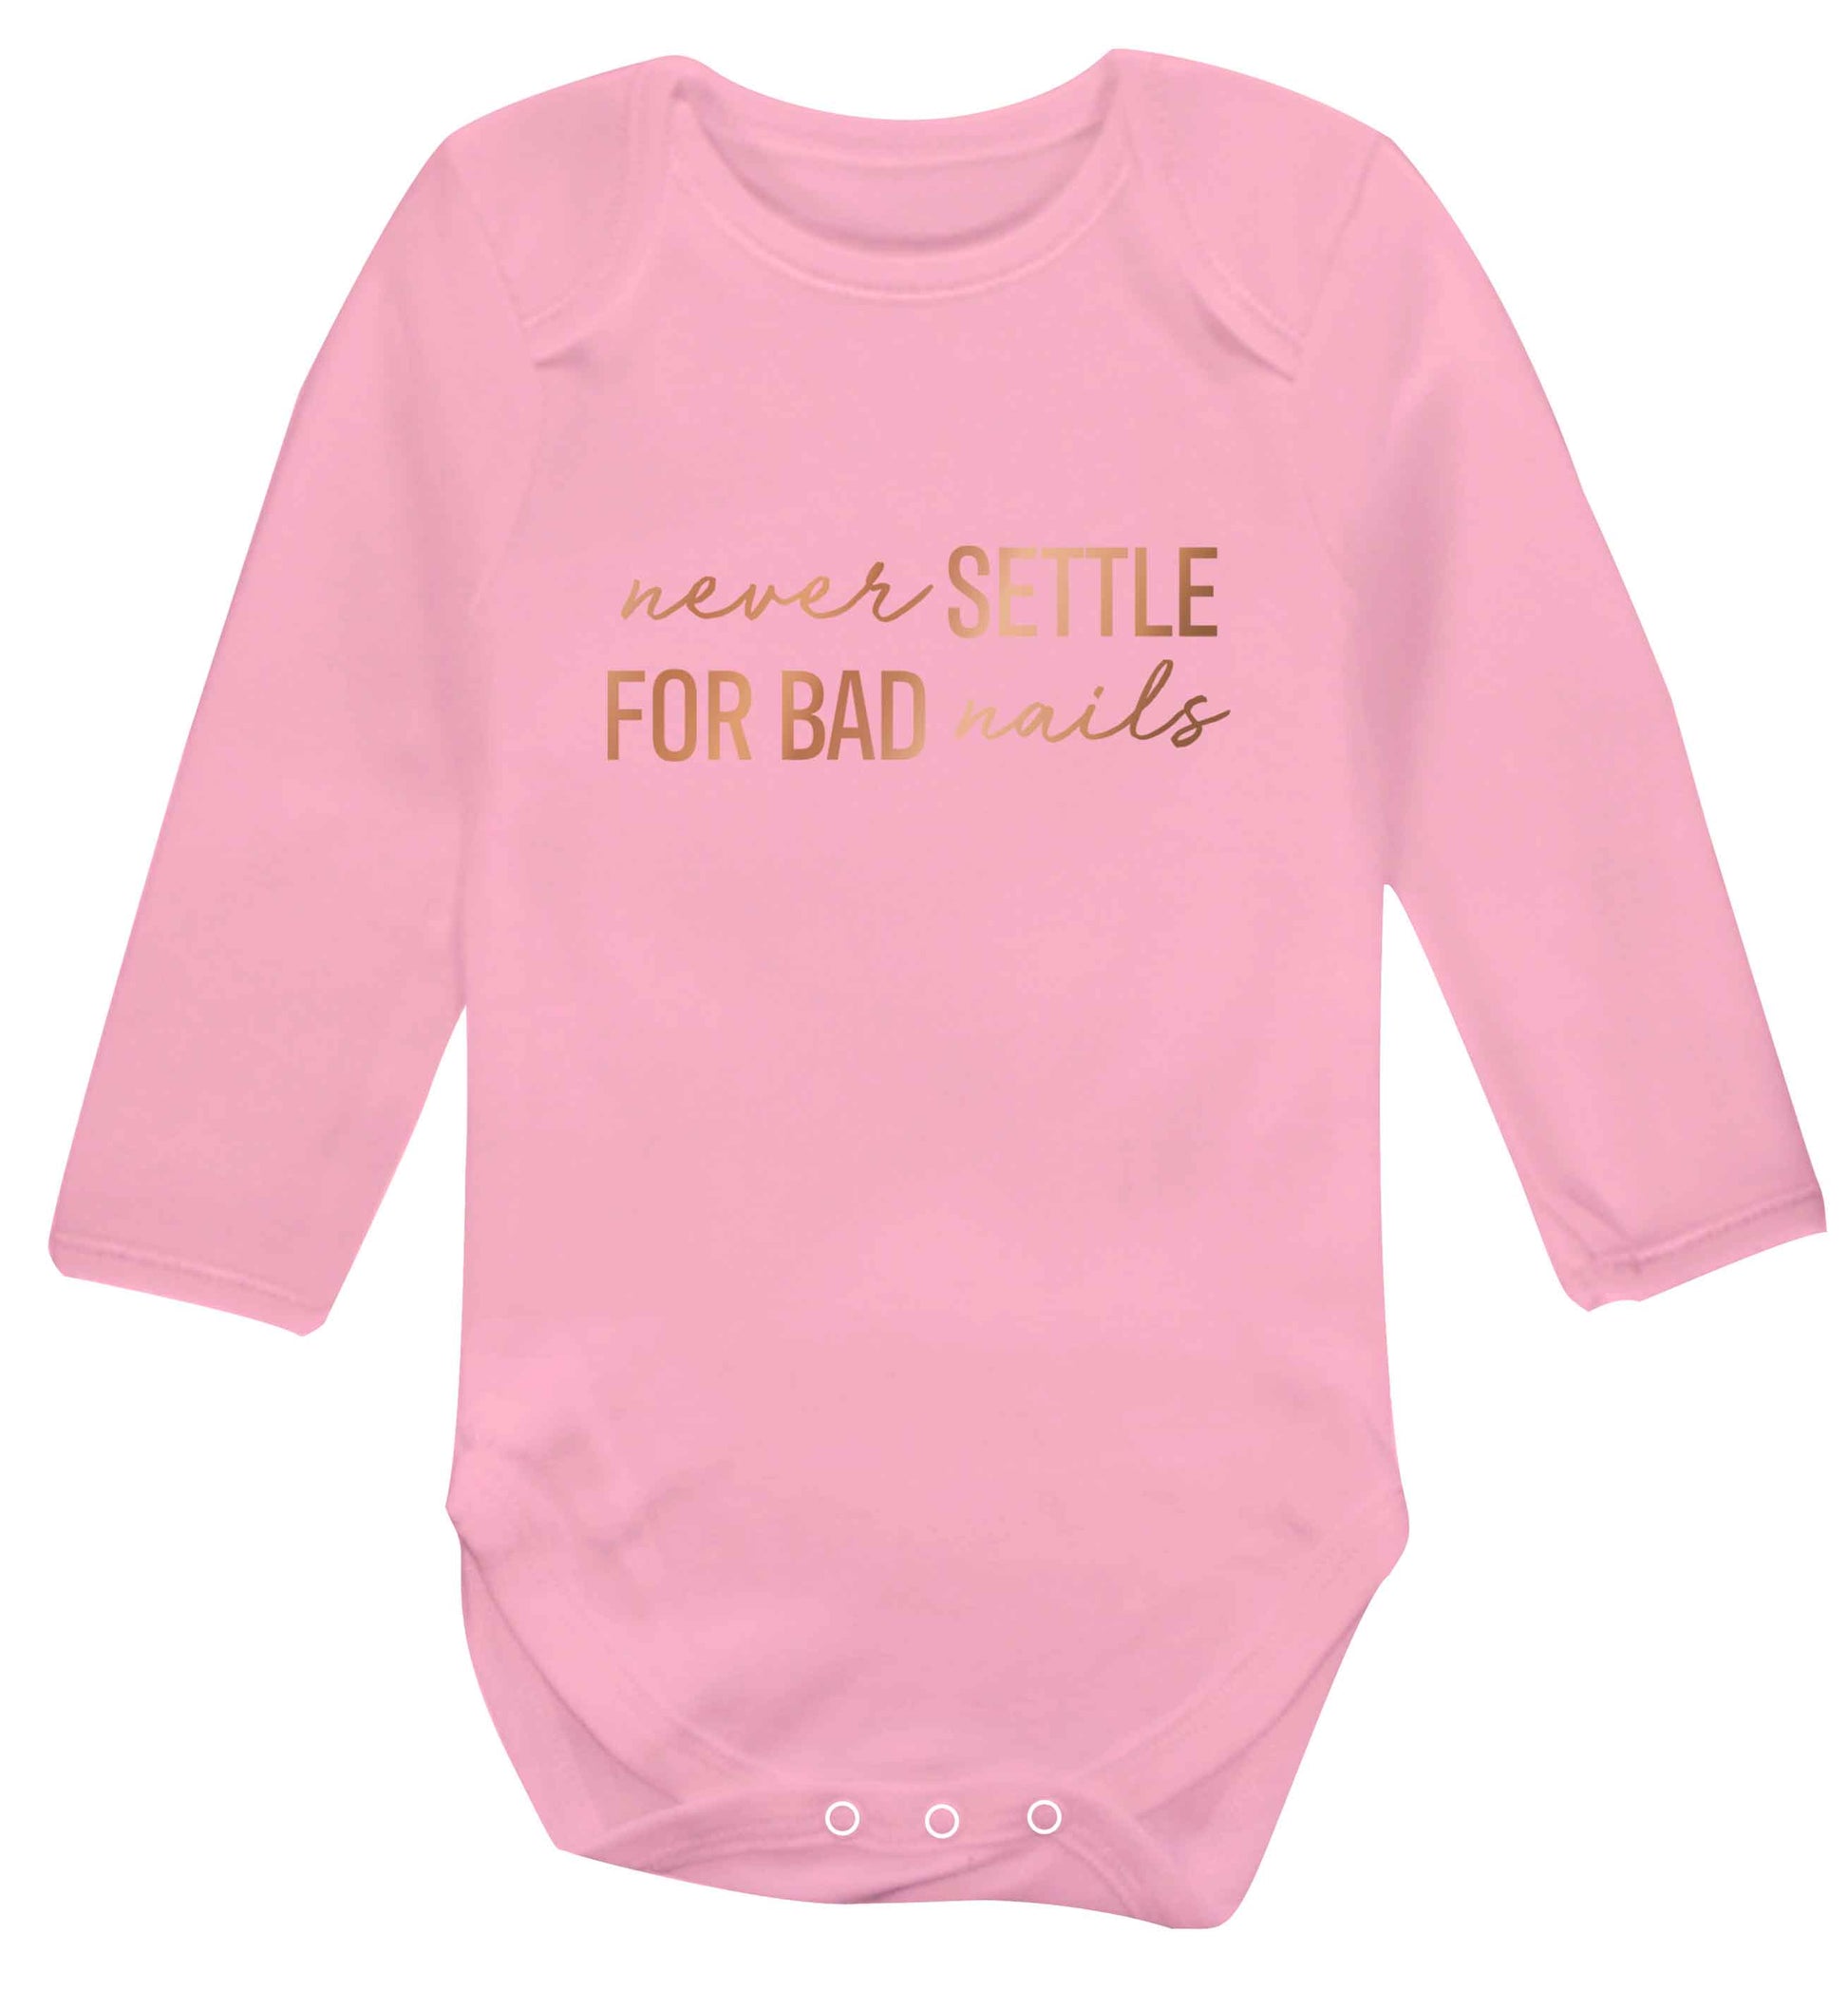 Never settle for bad nails - rose gold baby vest long sleeved pale pink 6-12 months